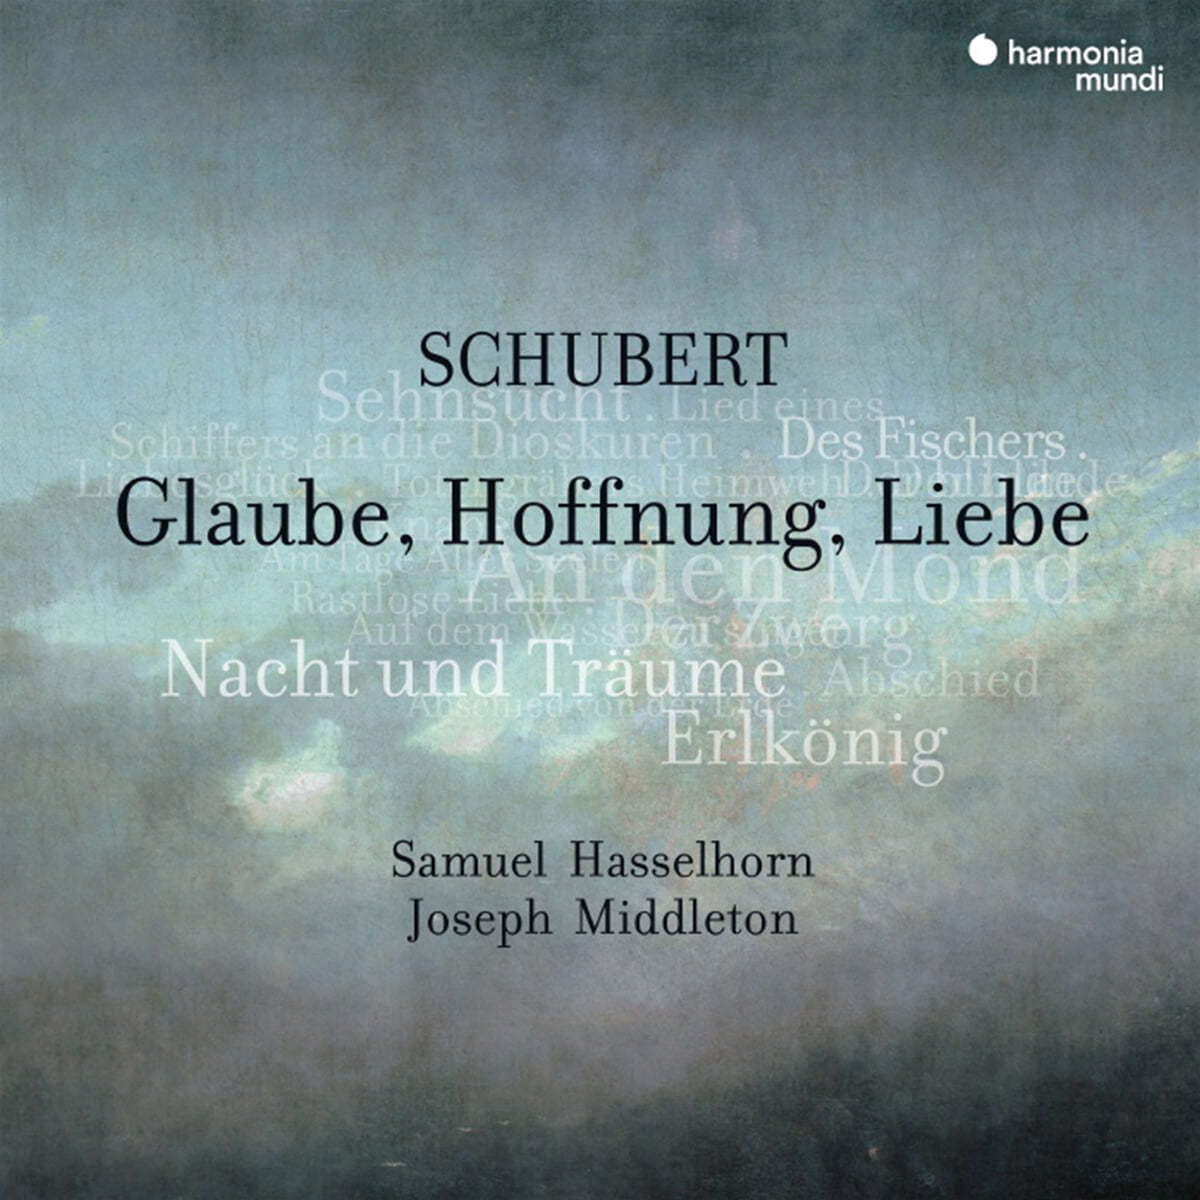 Samuel Hasselhorn 슈베르트: 믿음, 소망, 사랑 - 사무엘 하셀호른 (Schubert: Claube, Hoffnung, Liebe)